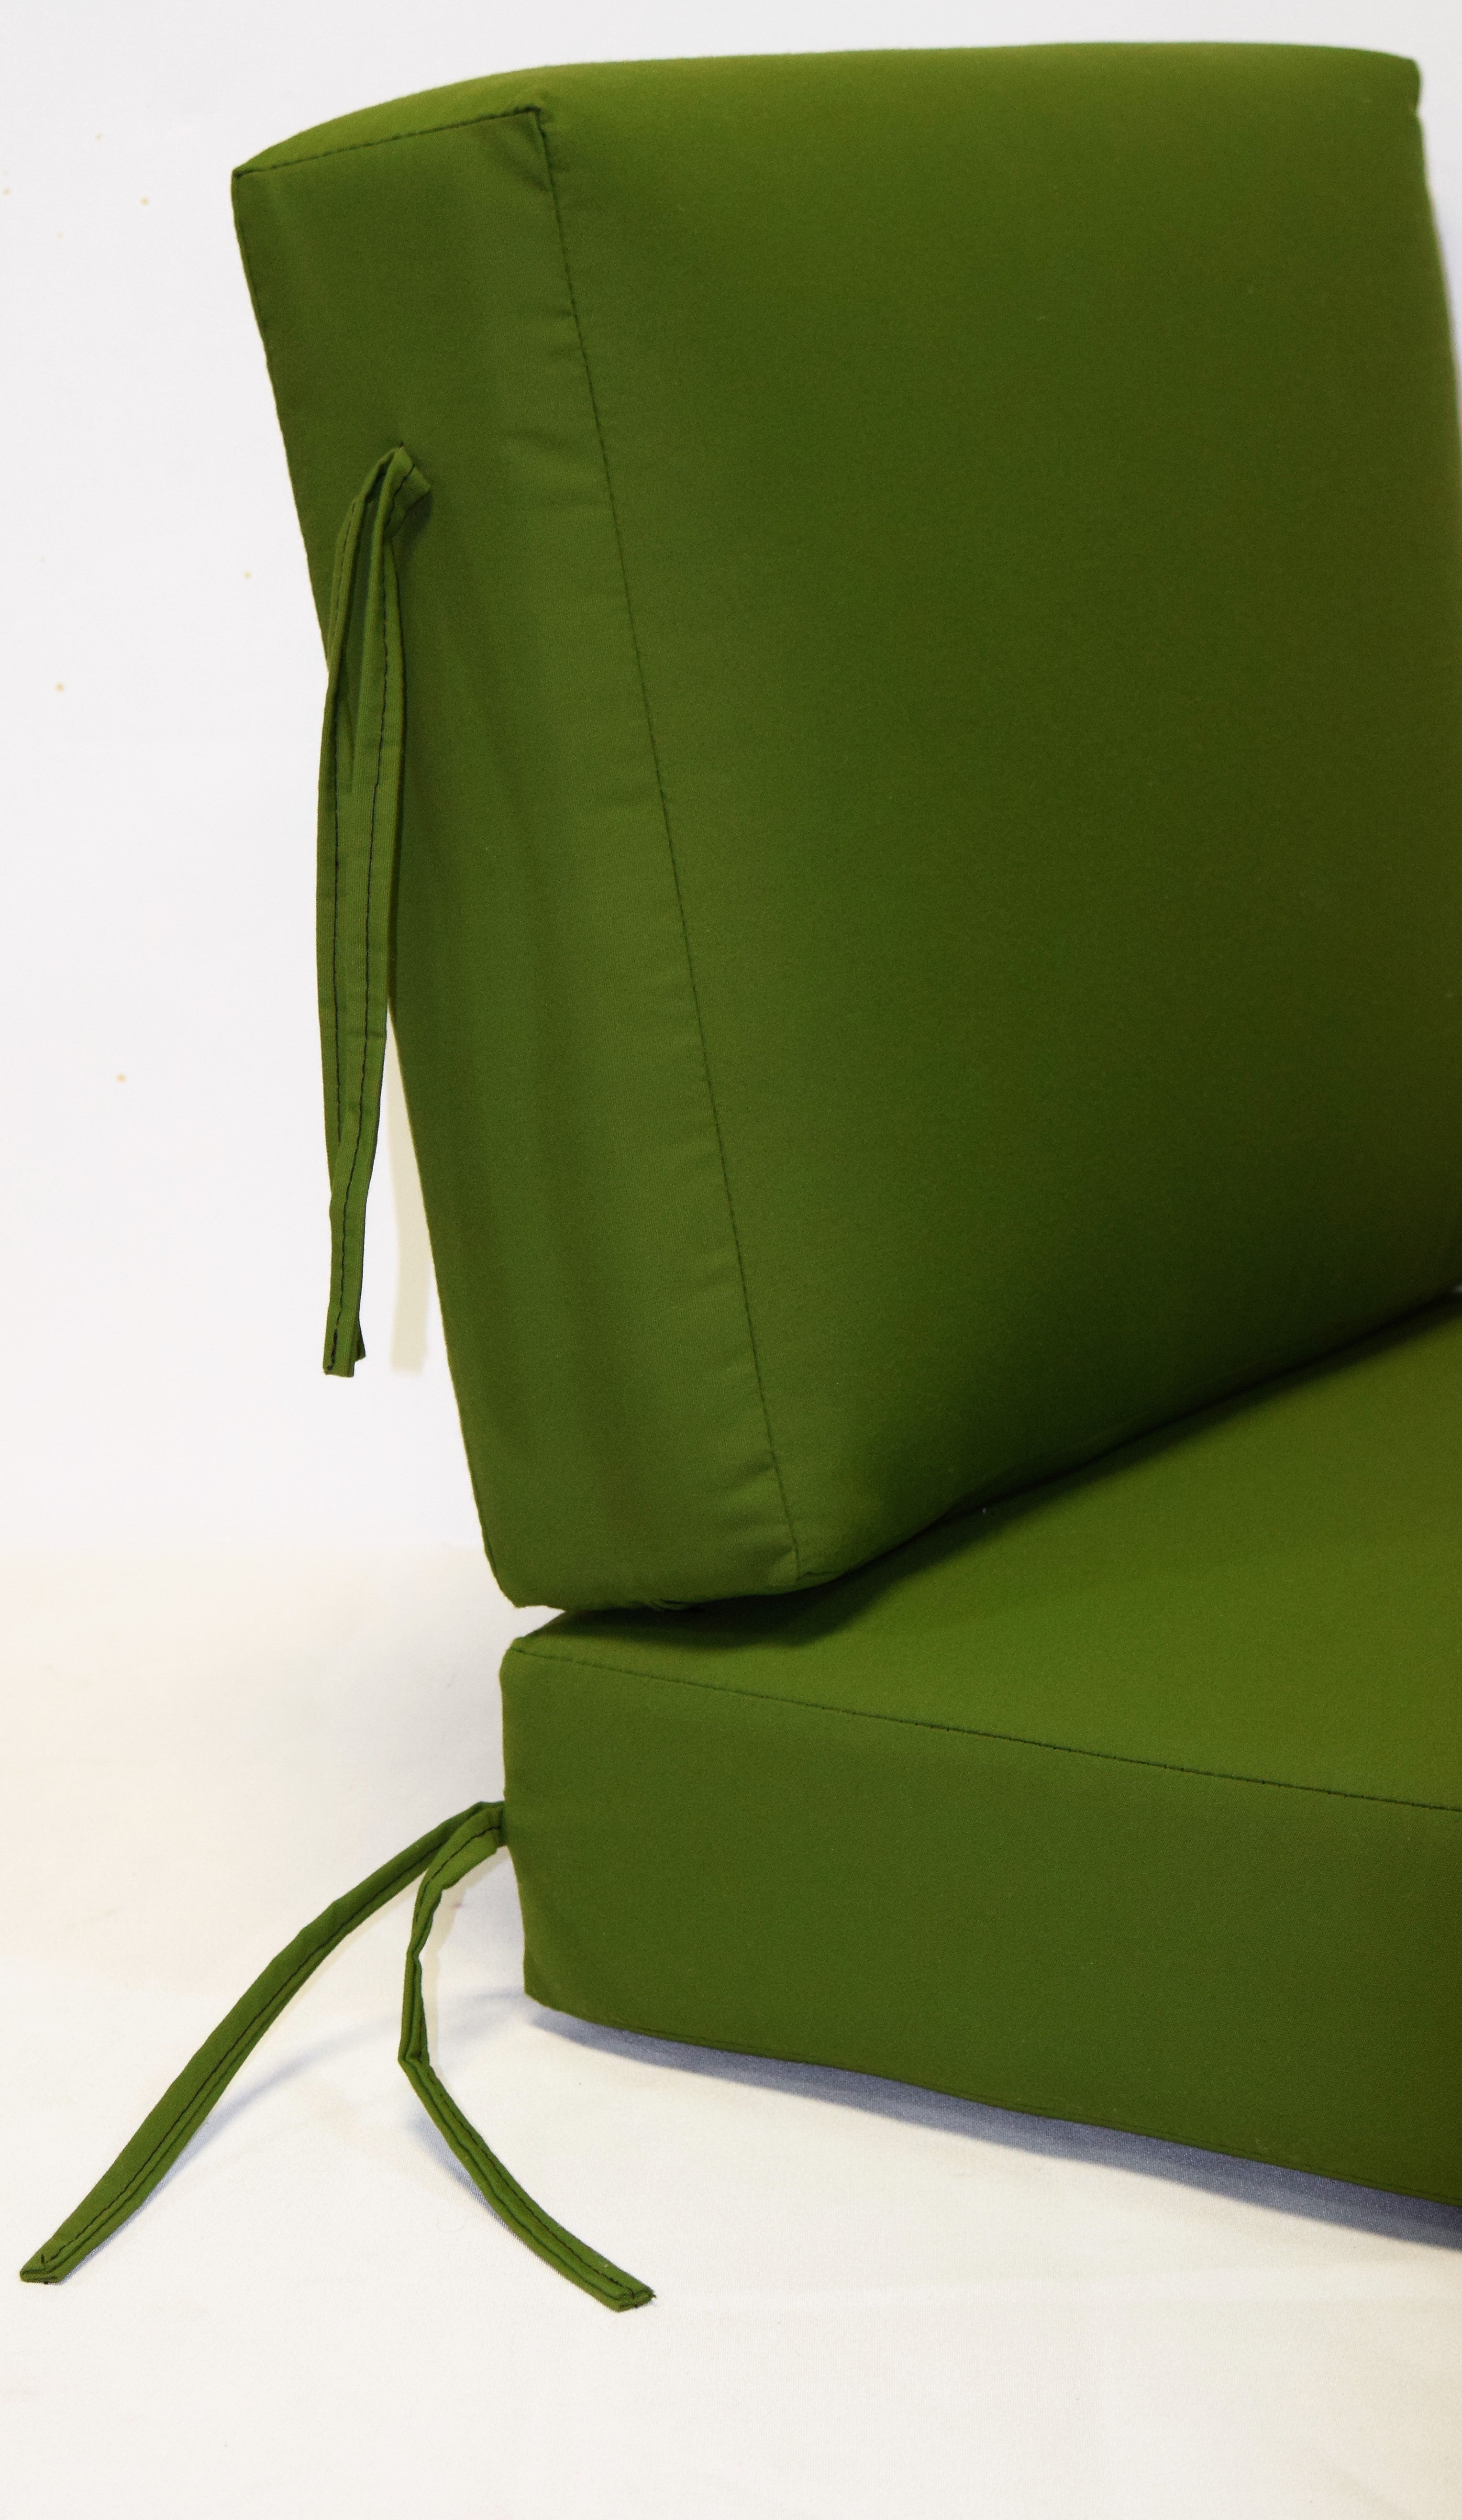 2 piece 24 wide x 26 deep seat x 20 high back in Epic Sunbrella Fabrics $329.99 -4"thick